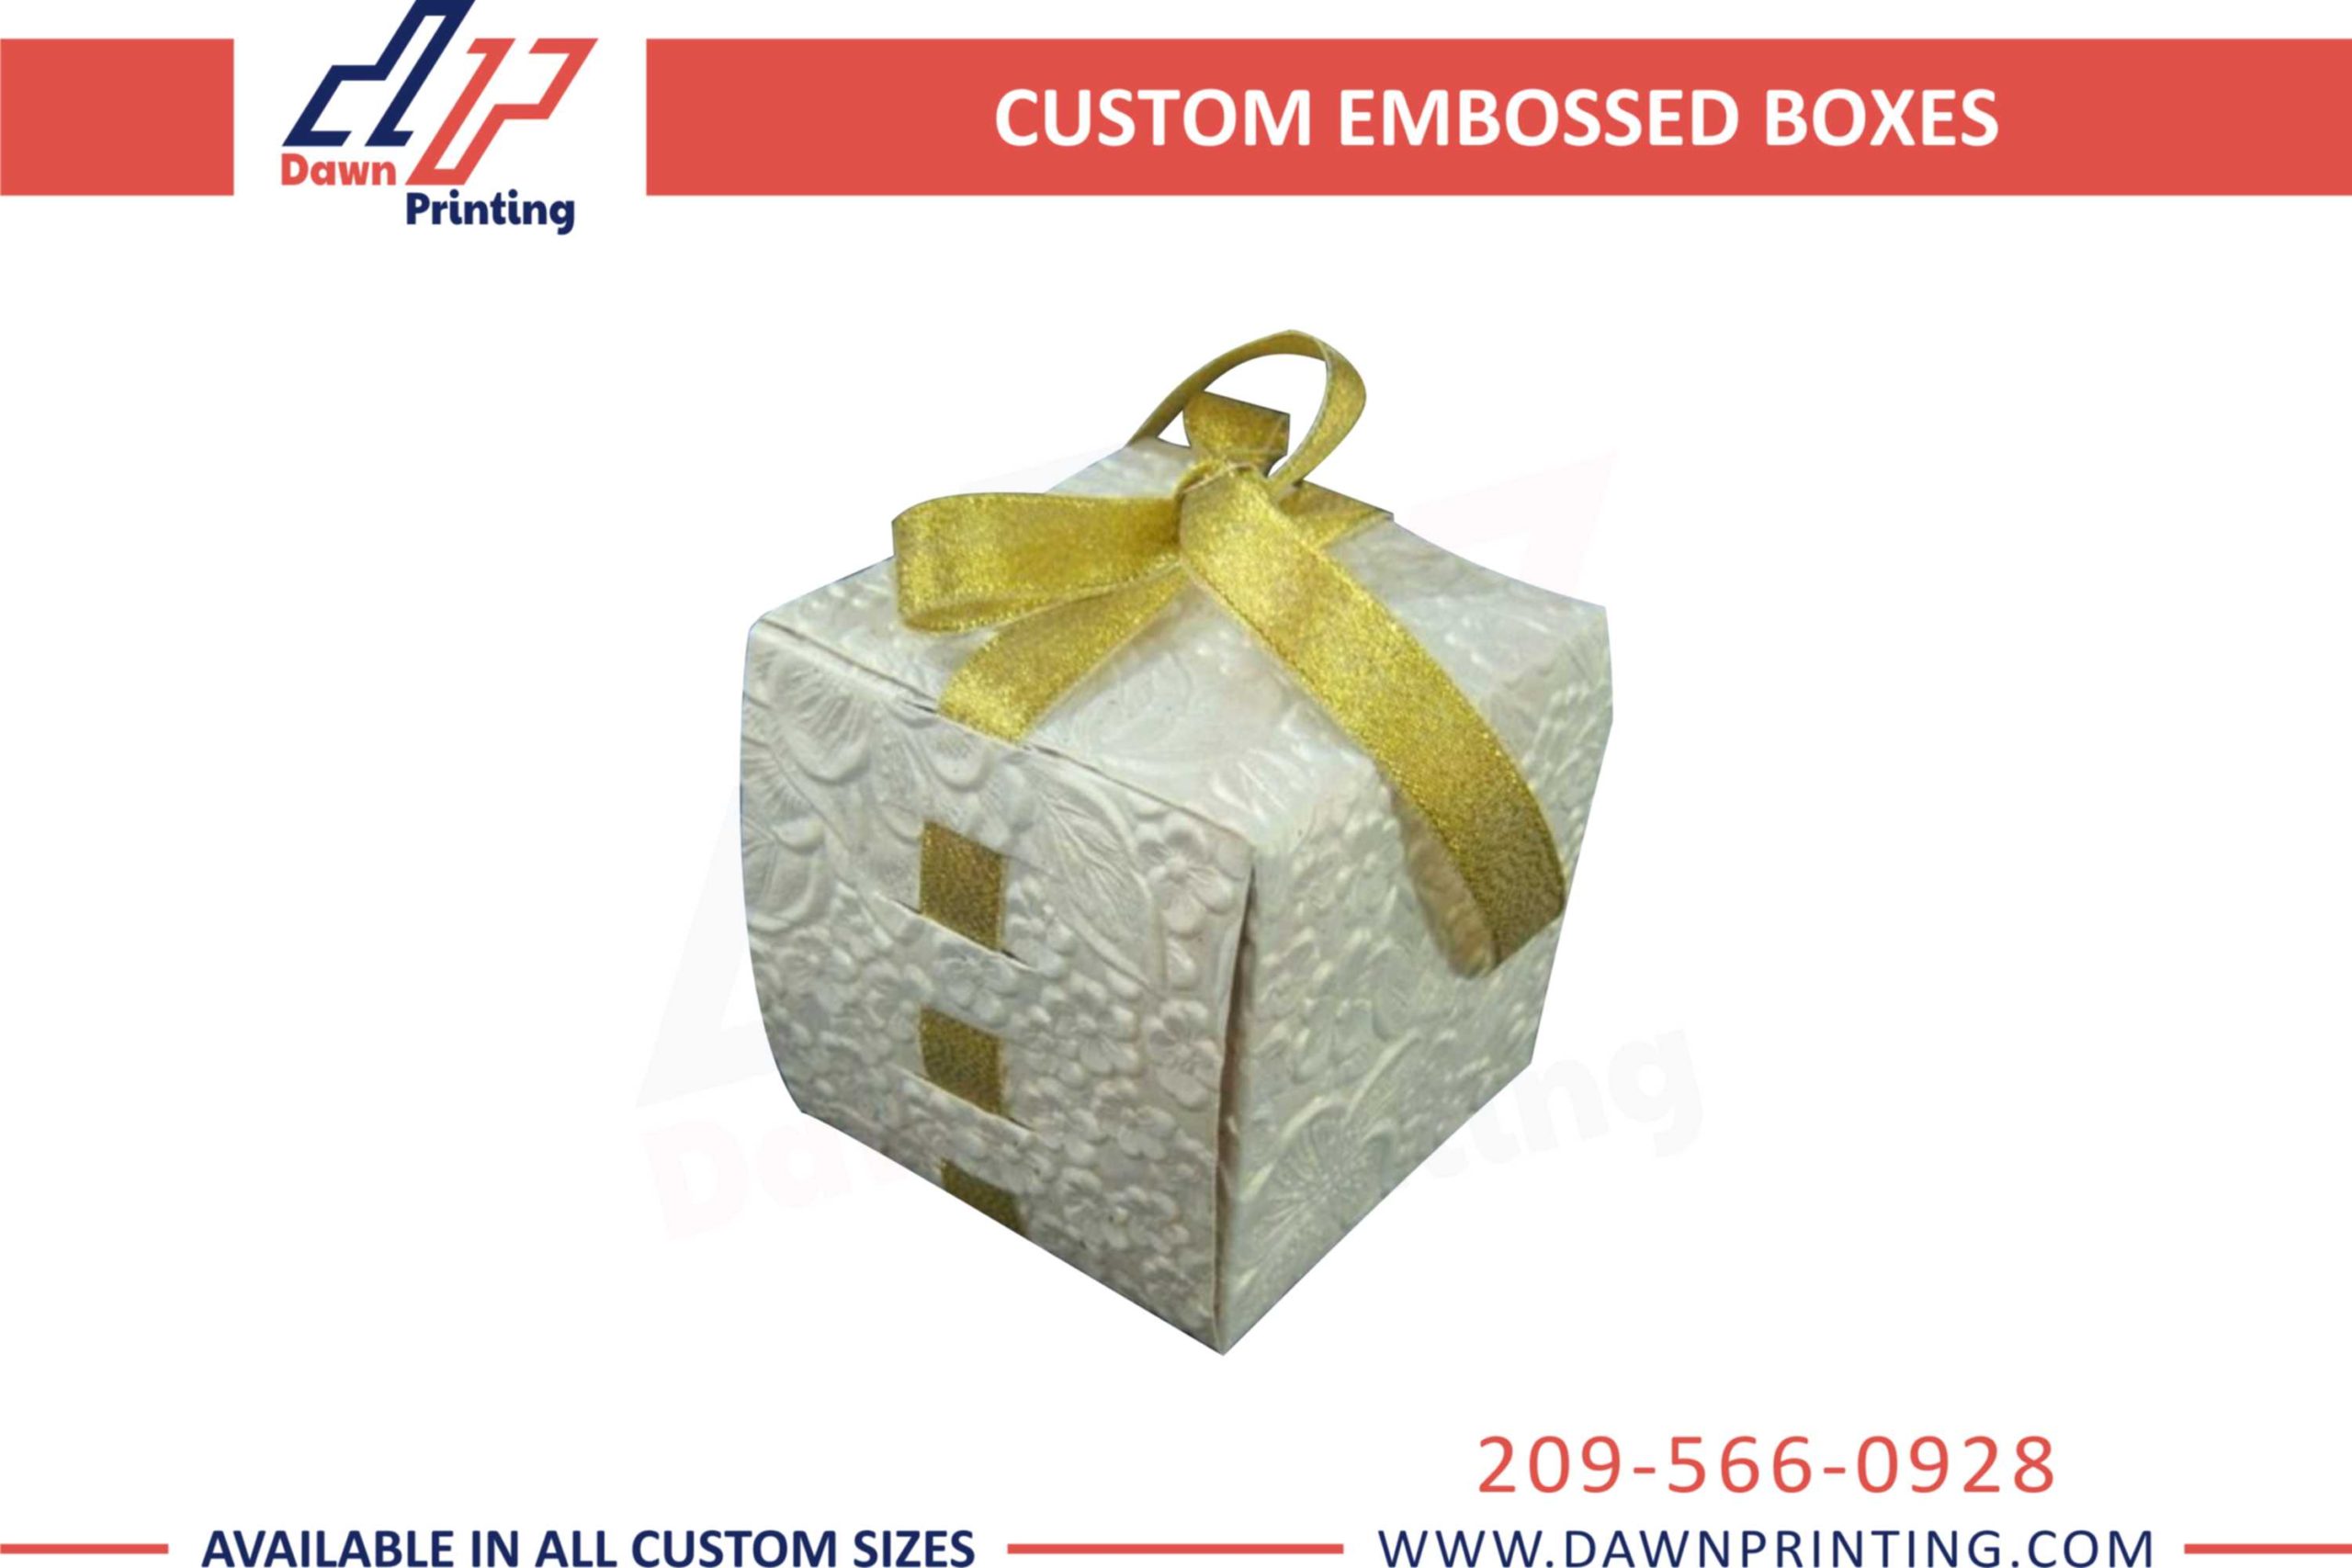 Custom Printed Embossed Boxes - Dawn Printing